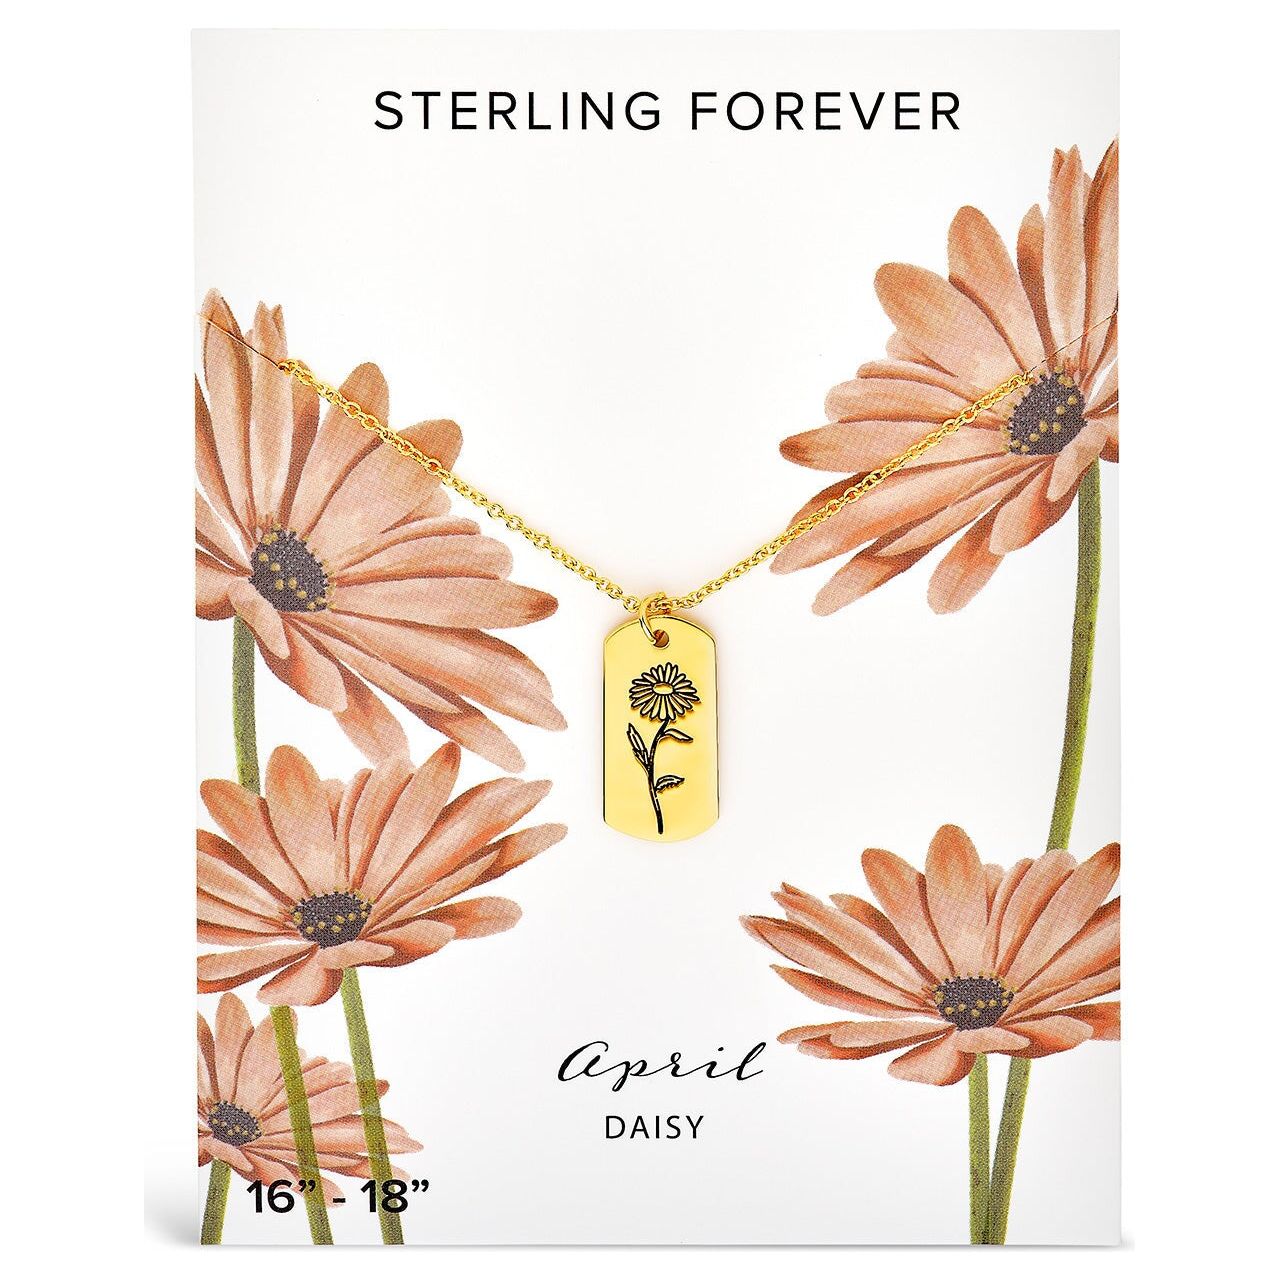 Colgante de flor de nacimiento de Sterling Forever